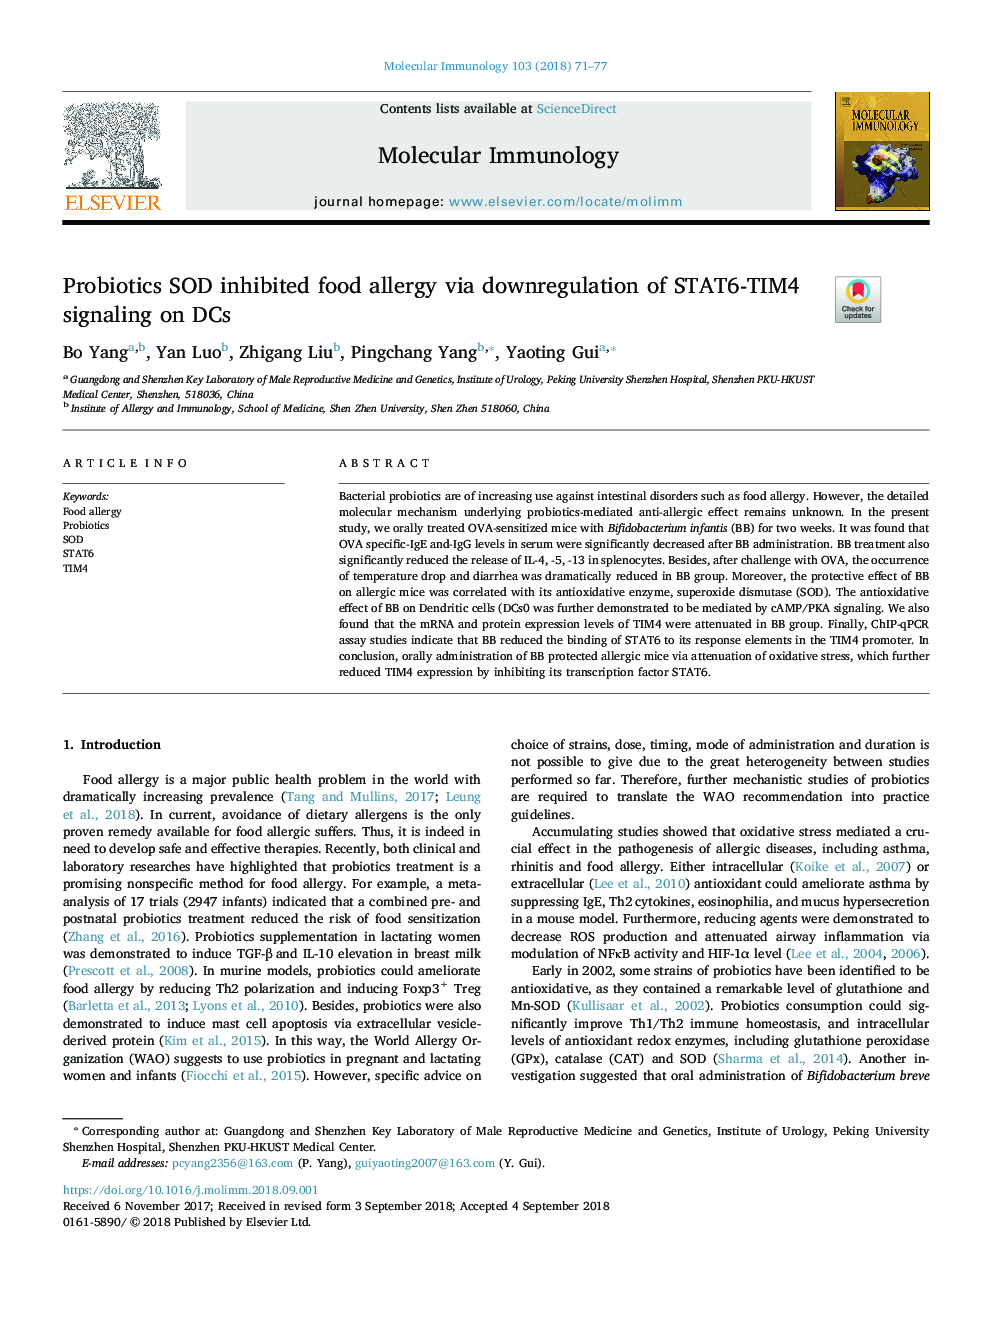 Probiotics SOD inhibited food allergy via downregulation of STAT6-TIM4 signaling on DCs